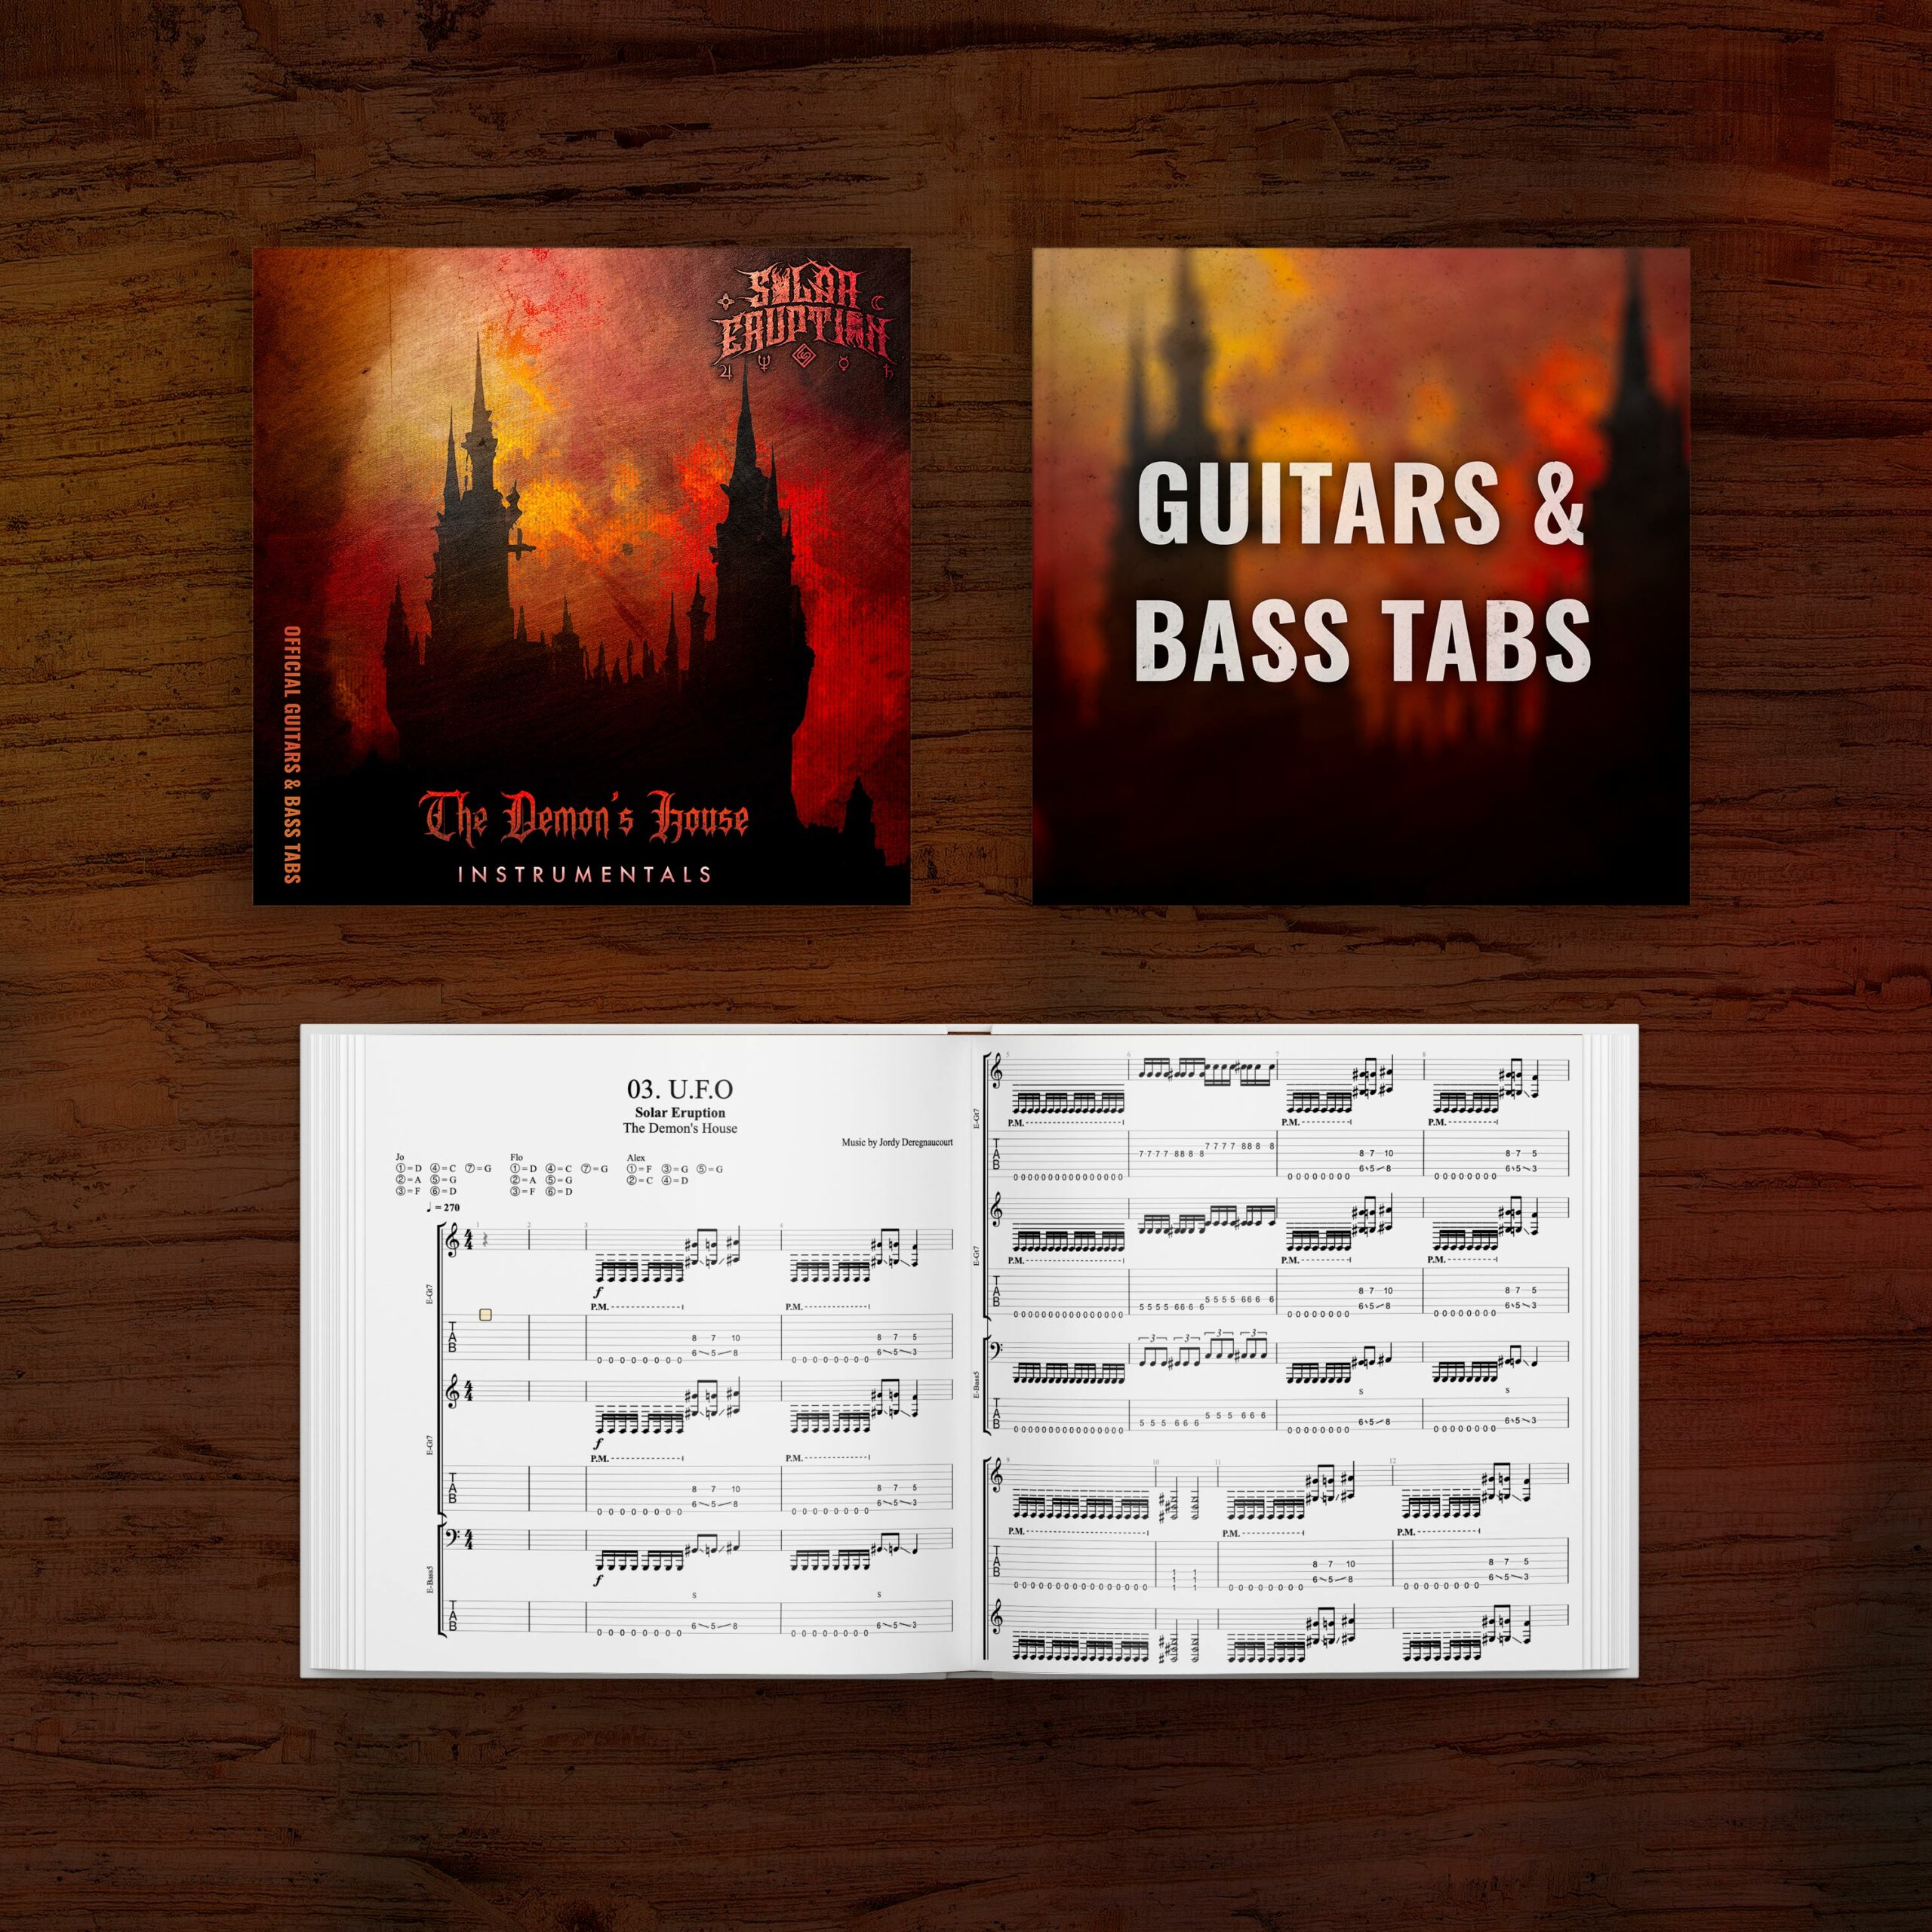 The Demon's House Guitars & BASS TABS